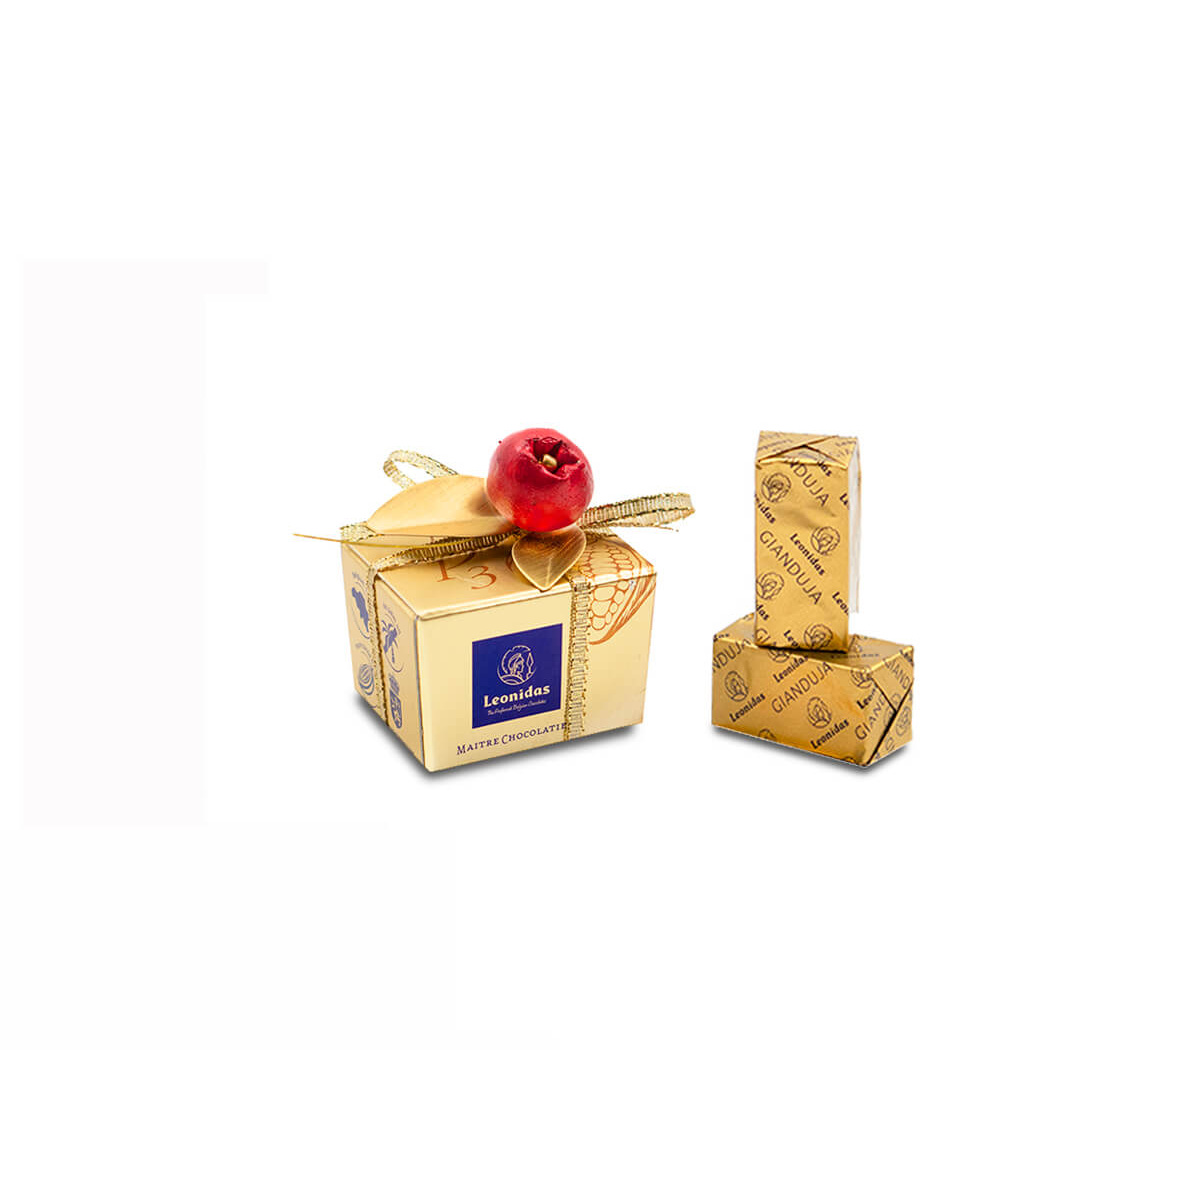 Mίνι κουτί χάρτινο Leonidas με δύο τυλιχτές πραλίνες και γούρι ρόδι χειροποίητο